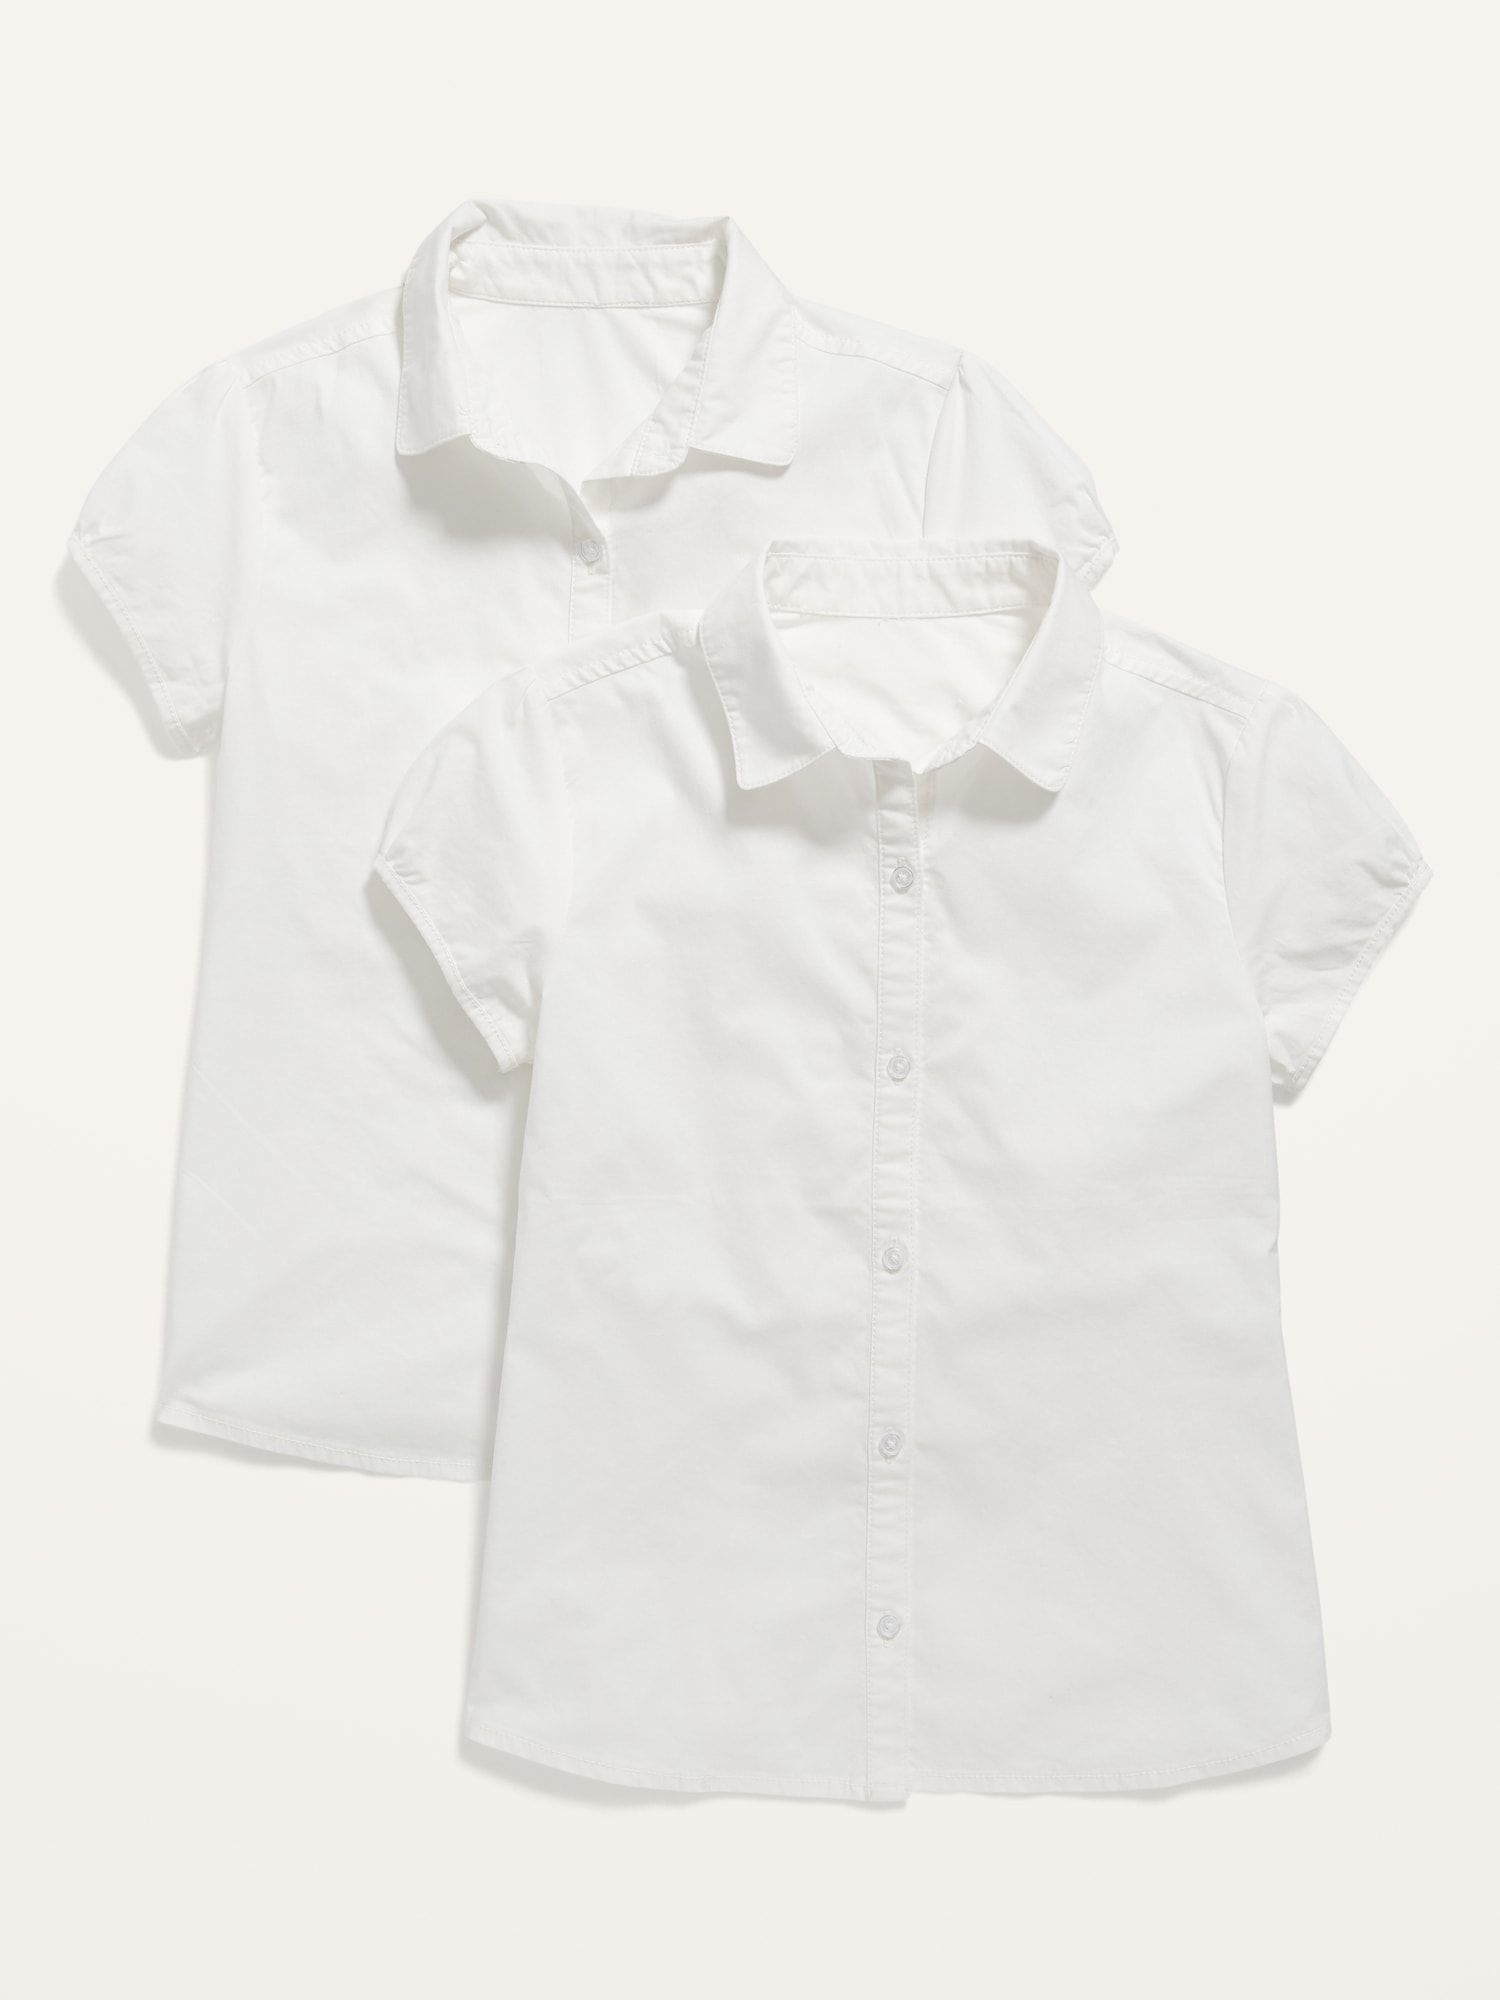 School Uniform Short-Sleeve Shirt 2-Pack for Girls